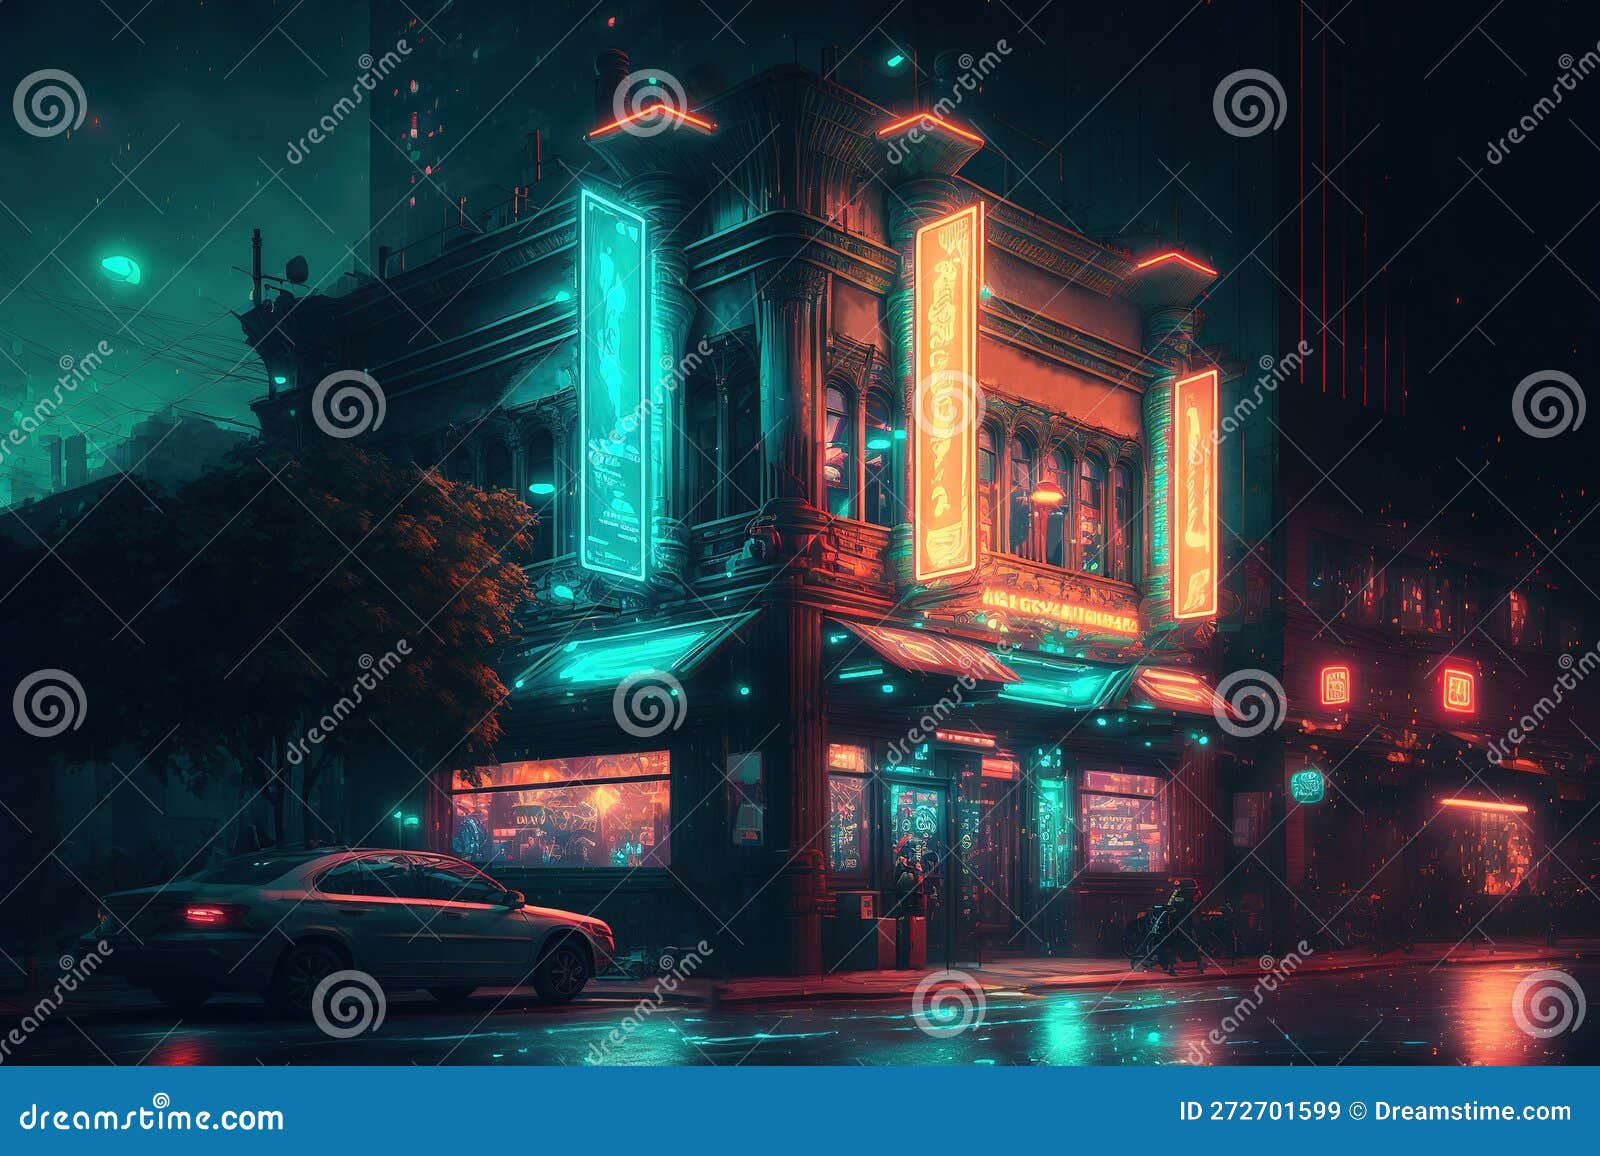 Cyberpunk city, abstract illustration, futuristic city, dystoptic artwork  at night, 4k wallpaper, Stock Illustration